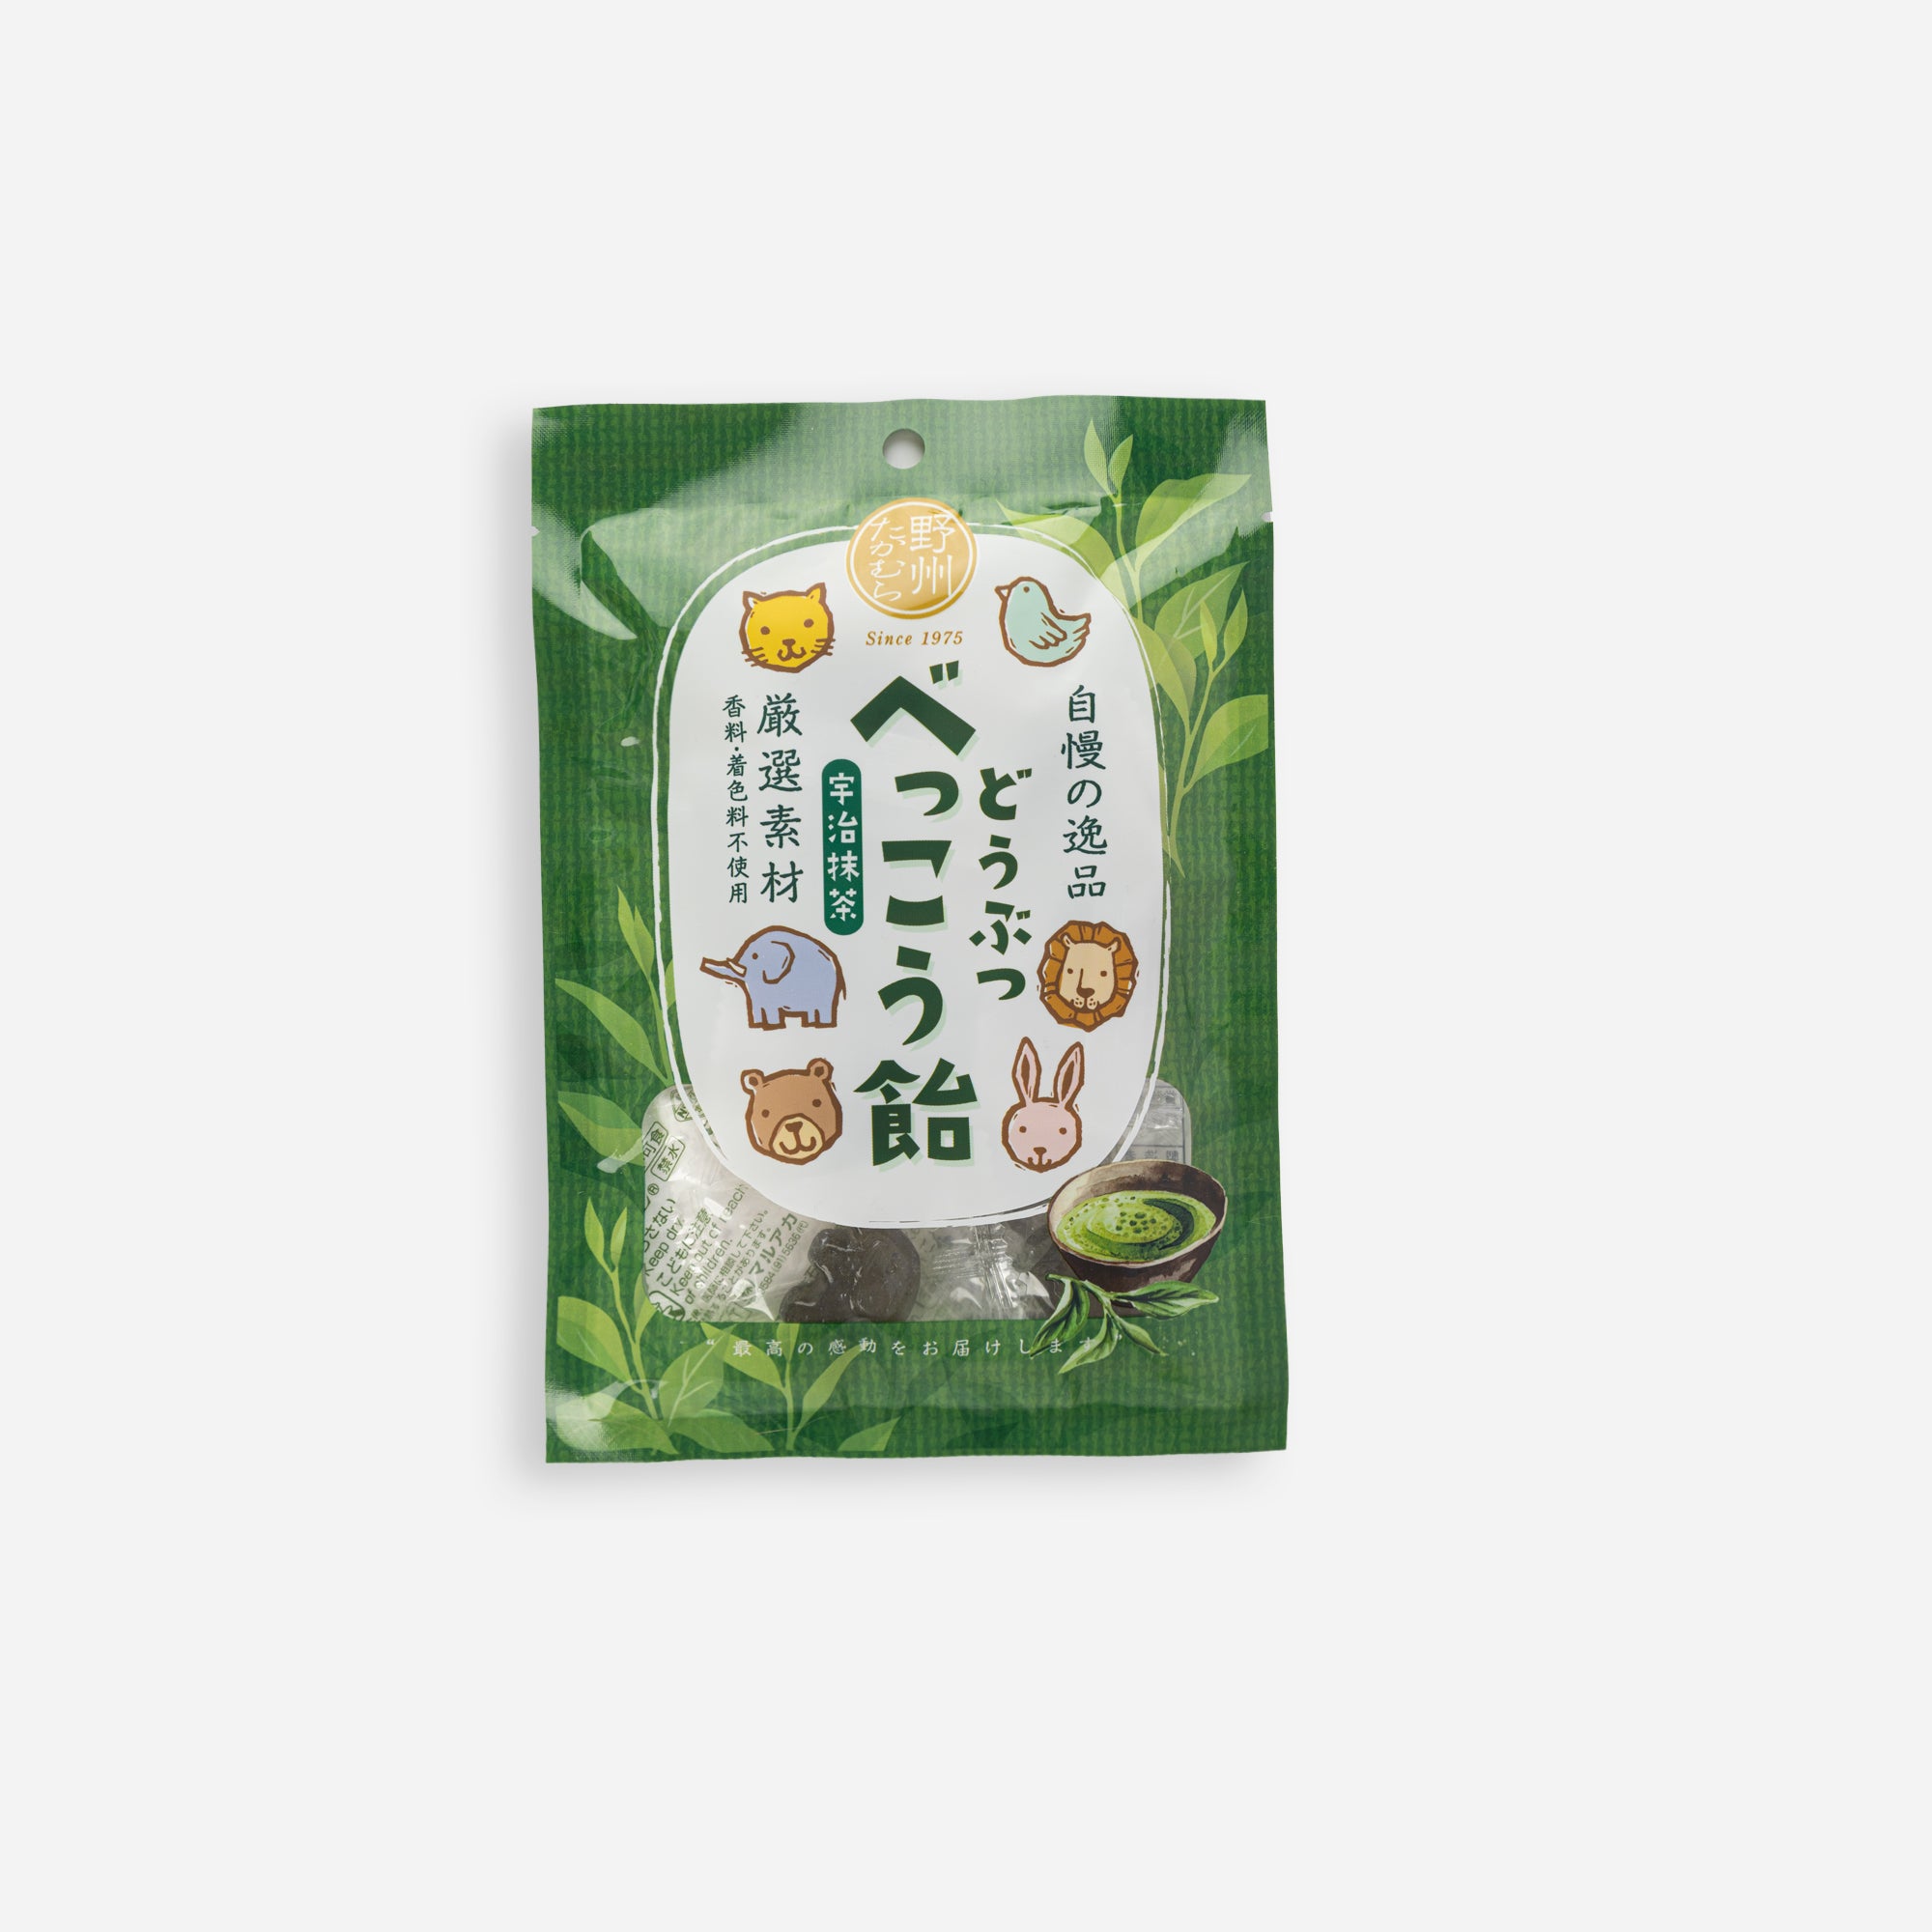 Takamura animal bekko candy